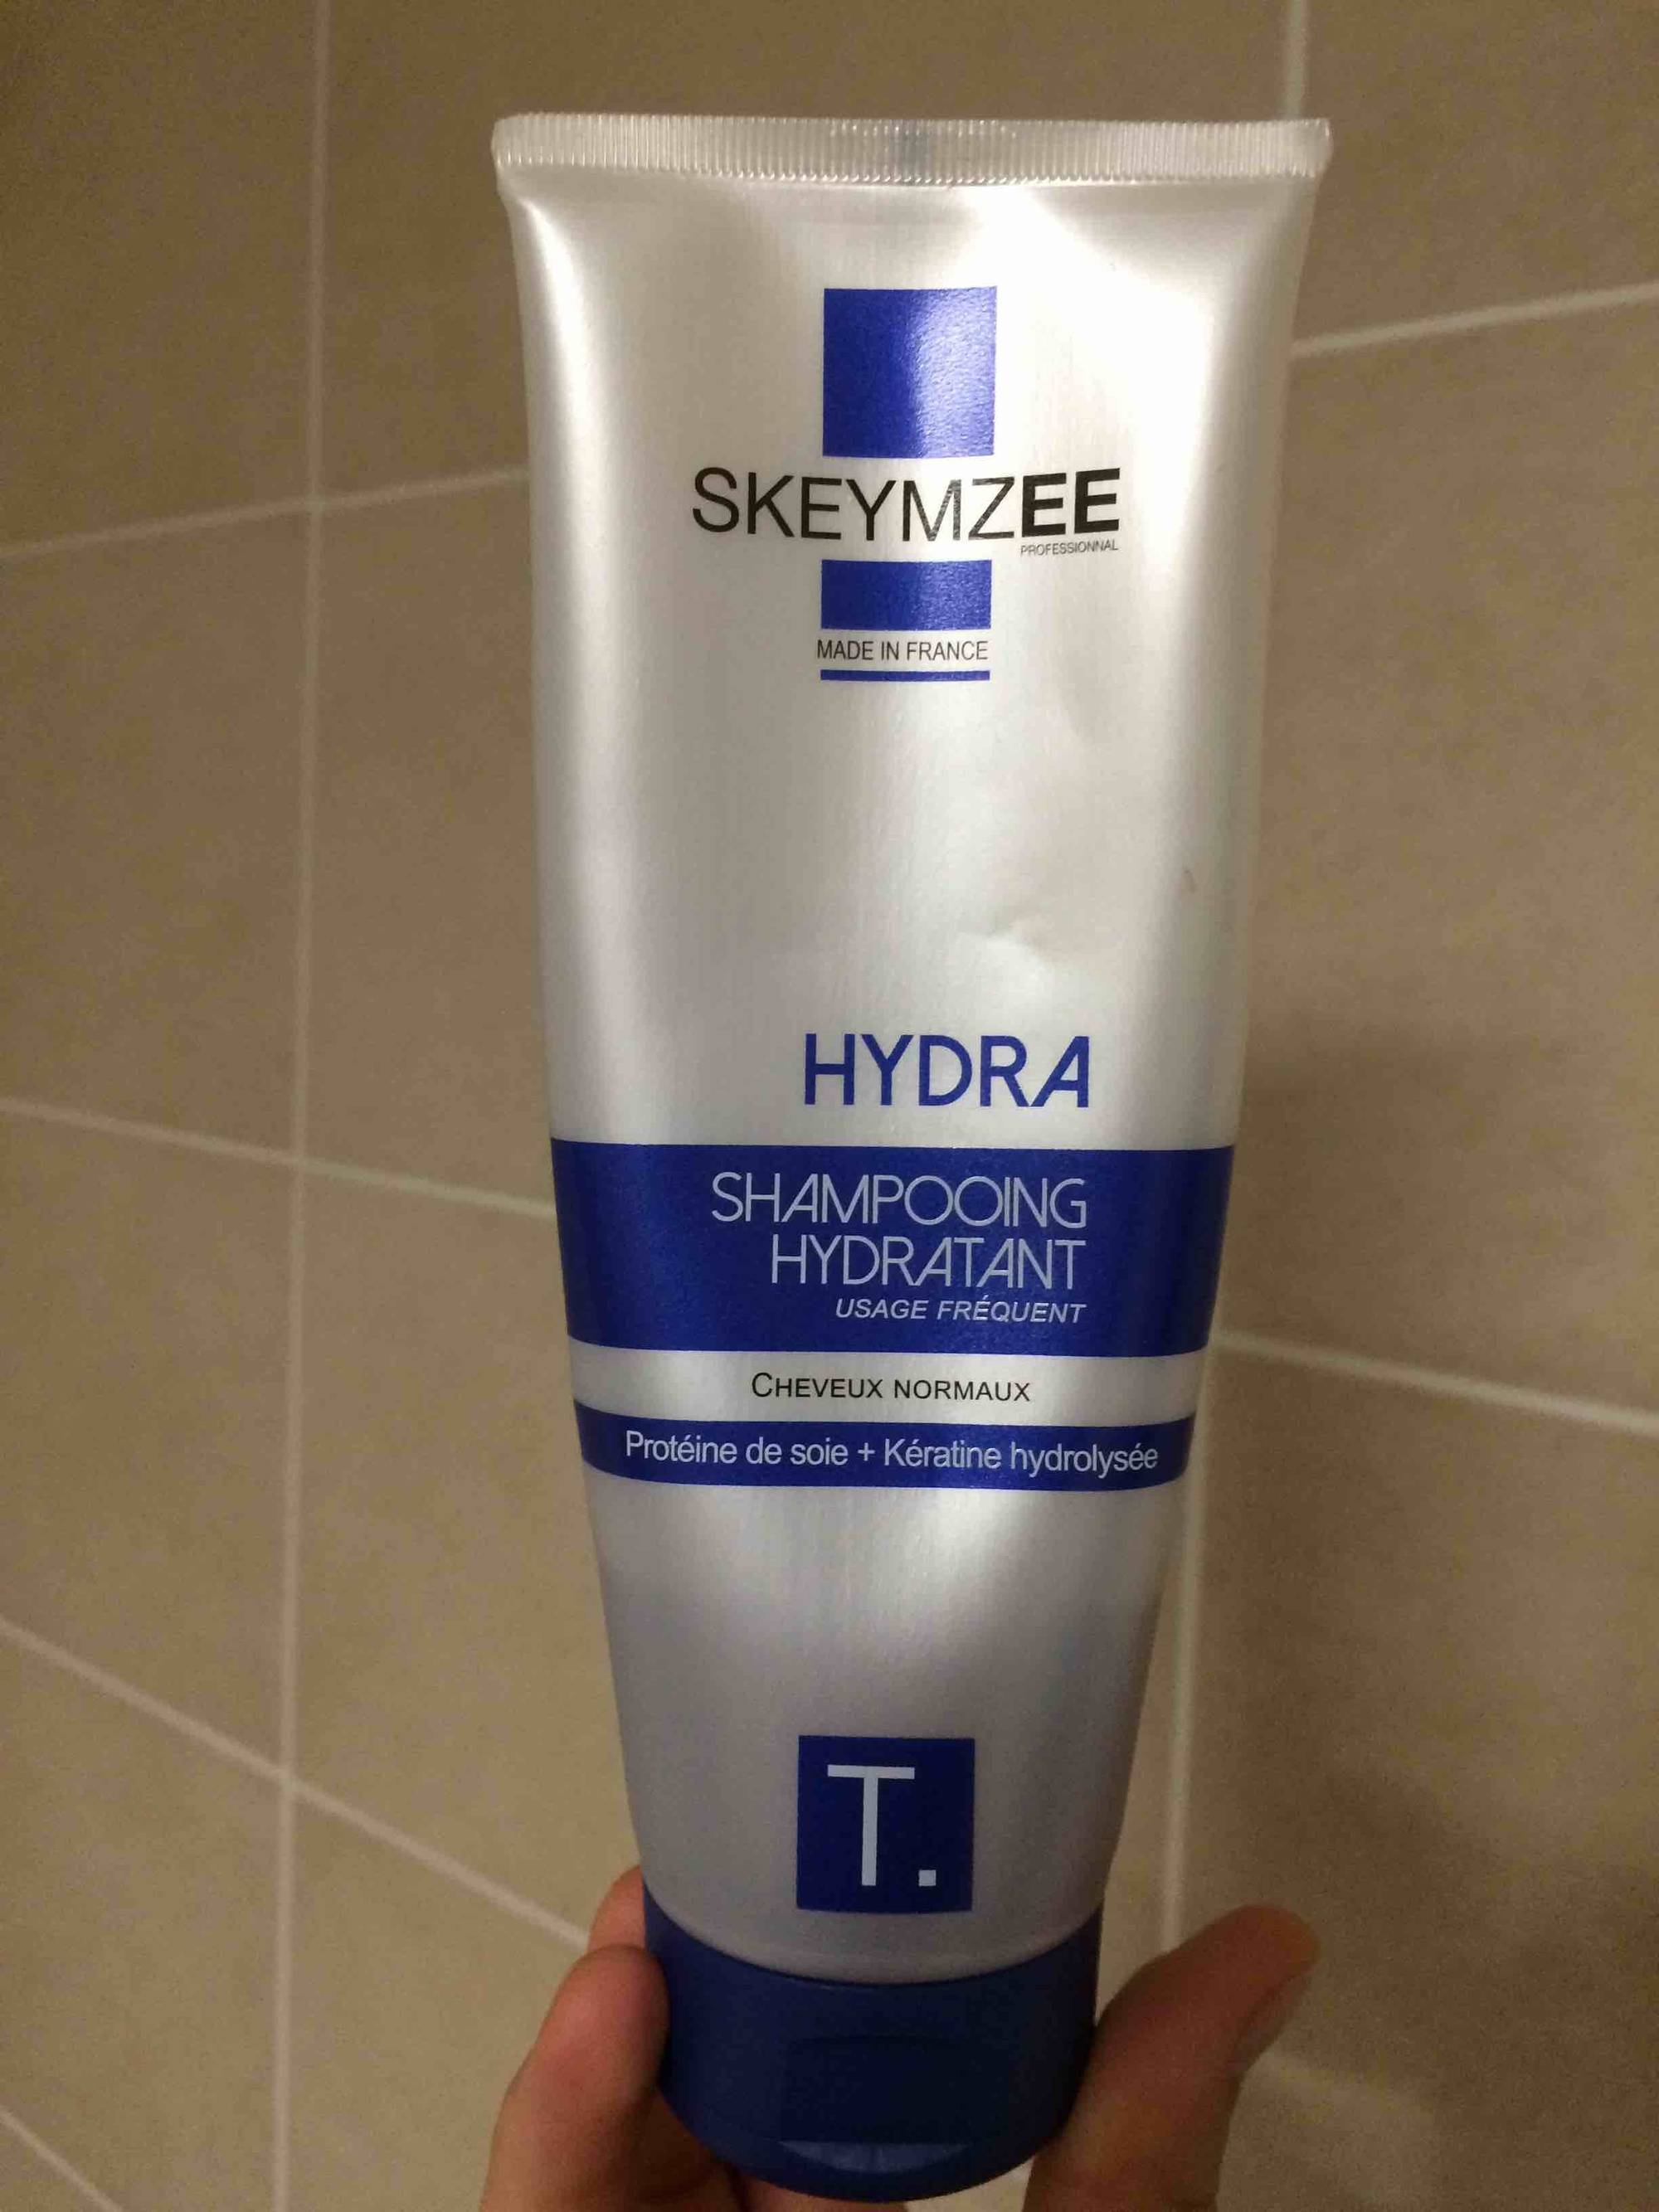 SKEYMZEE - Hydra - Shampooing hydratant